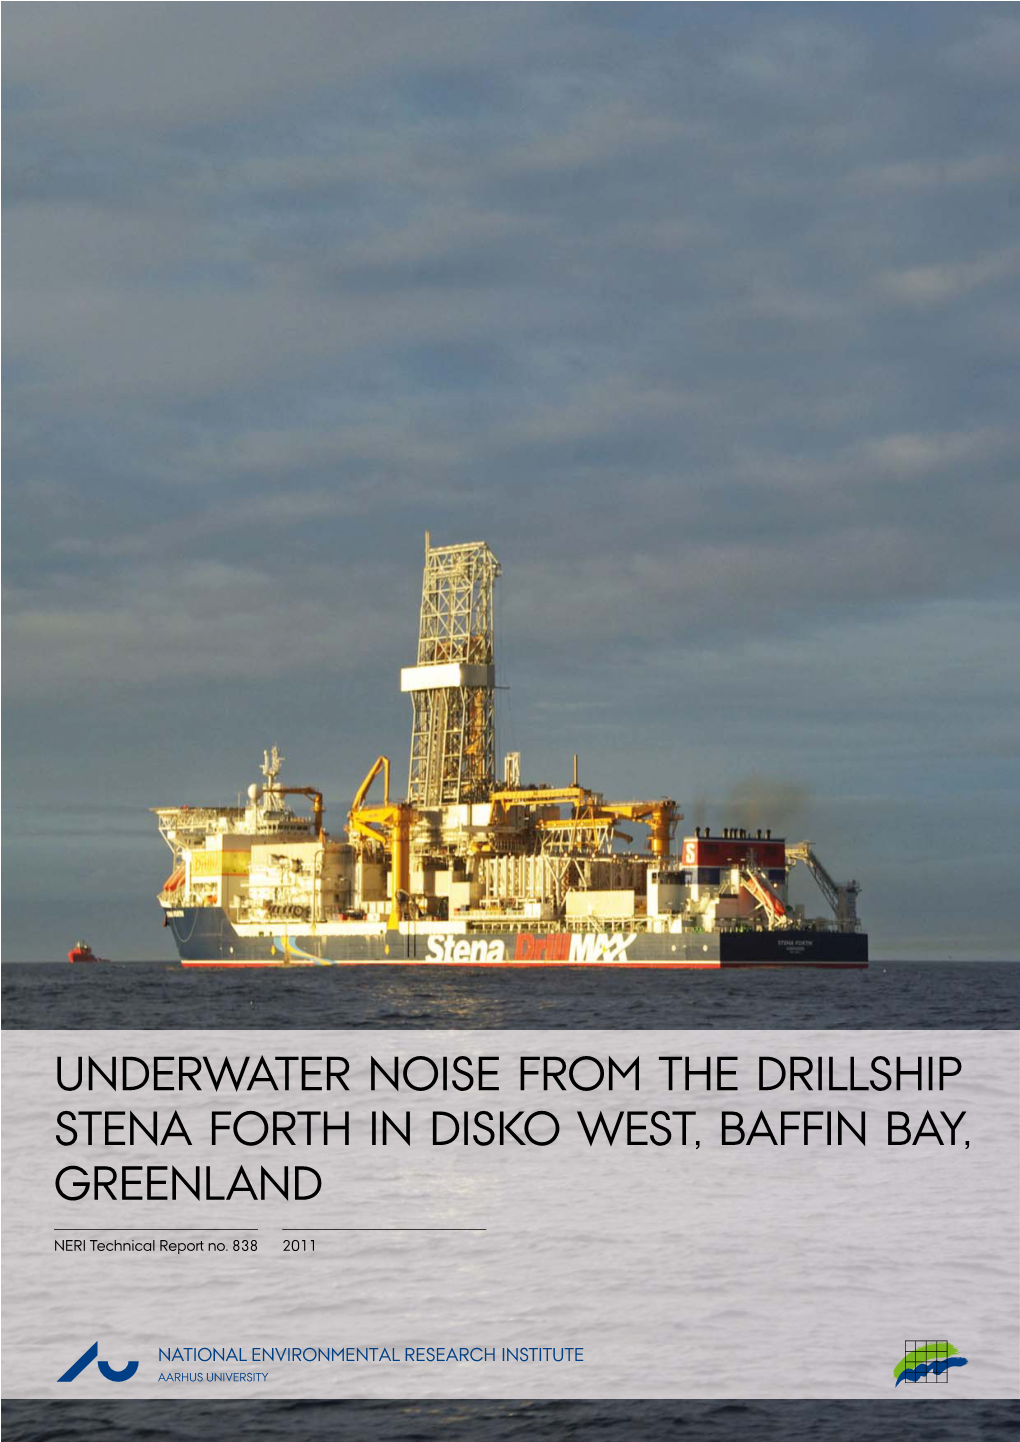 Underwater Noise from the Drillship Stena Forth in Disko West, Baffin Bay, Greenland